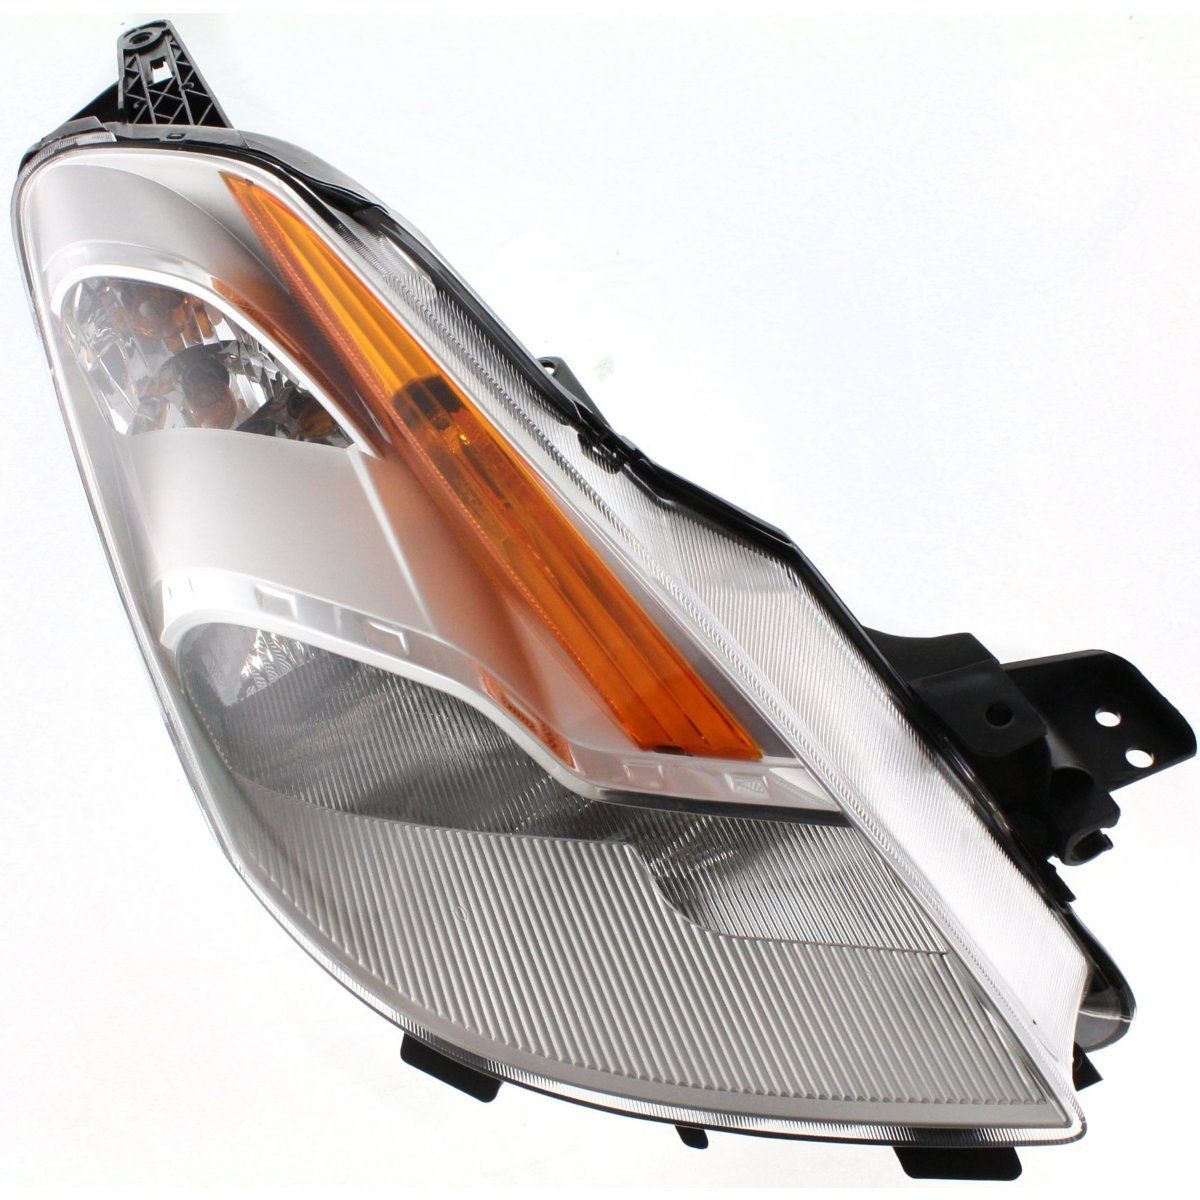 Headlight For 2008-2009 Nissan Altima Coupe Passenger Side w/ bulb | eBay